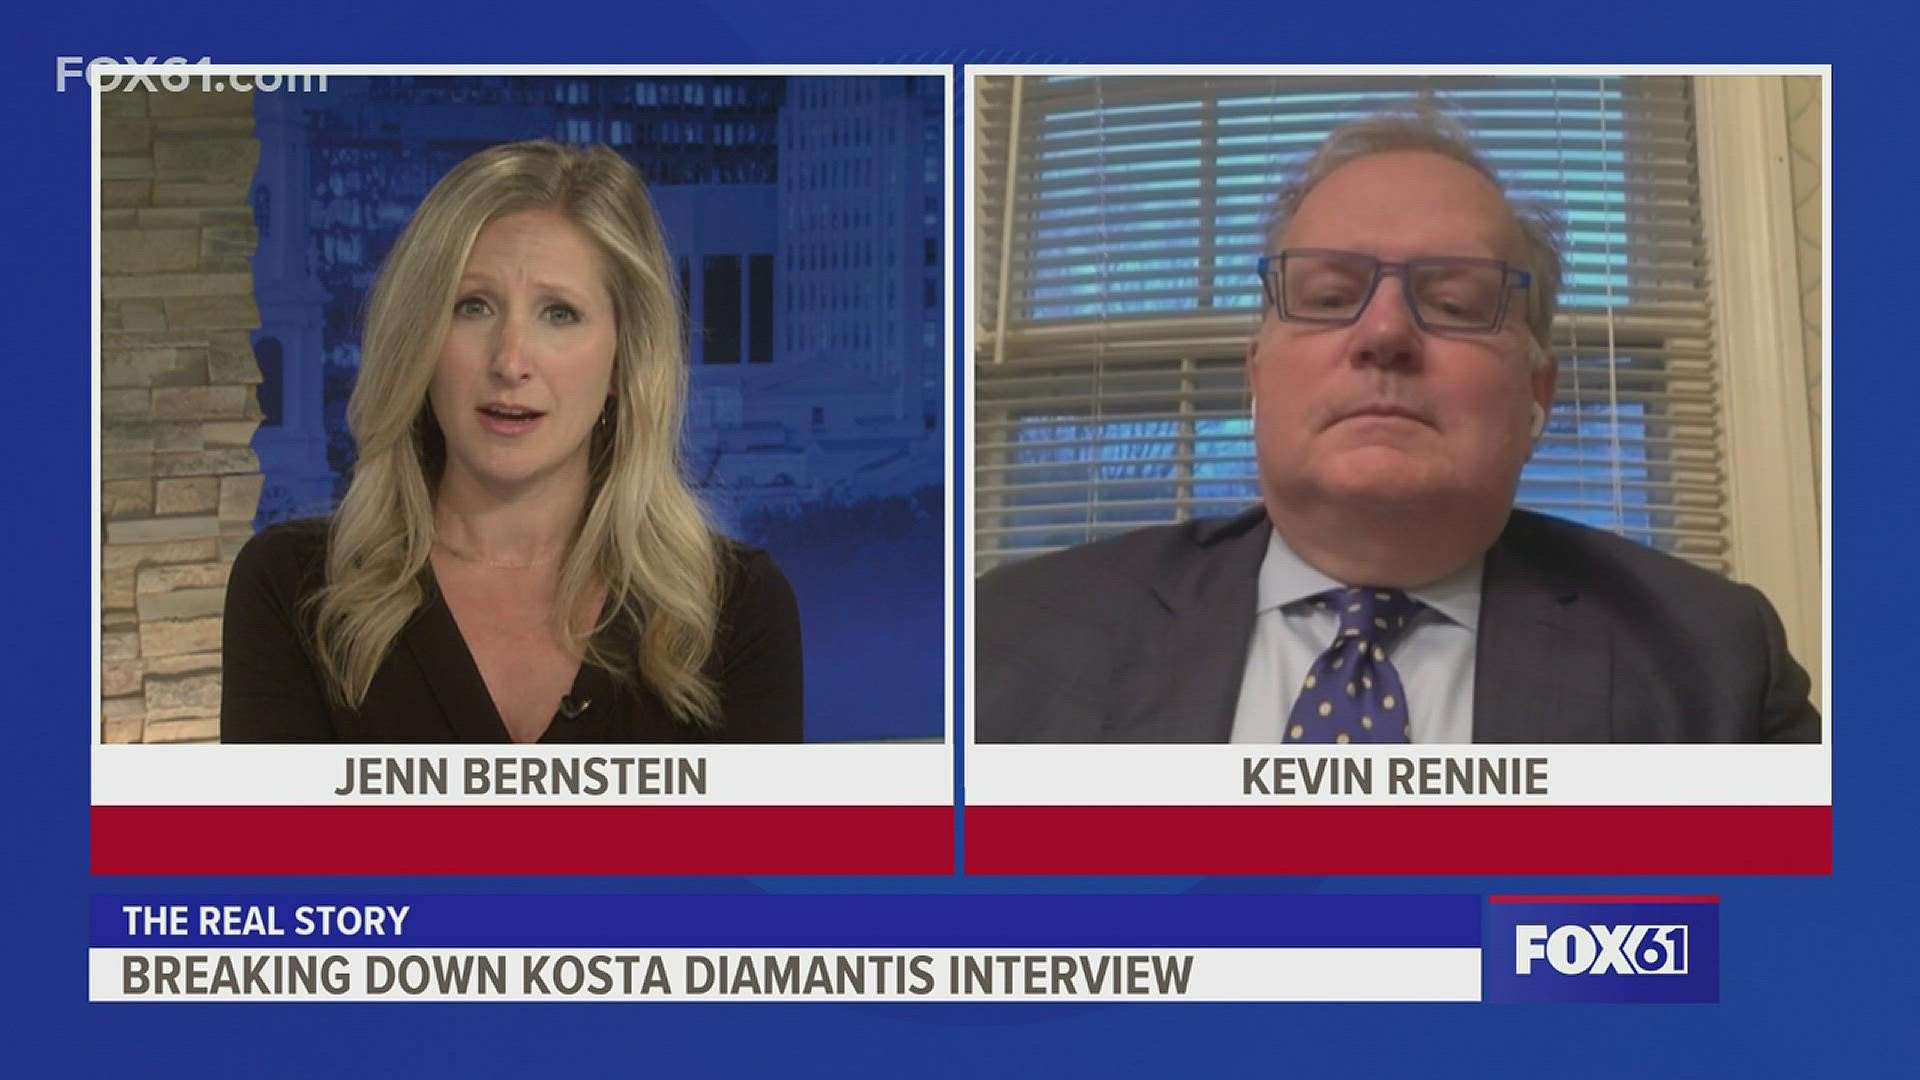 Kevin Rennie, Columnist for the Hartford Courant, breaks down Kosta Diamantis' 1-on-1 interview with Real Story host Jenn Bernstein.